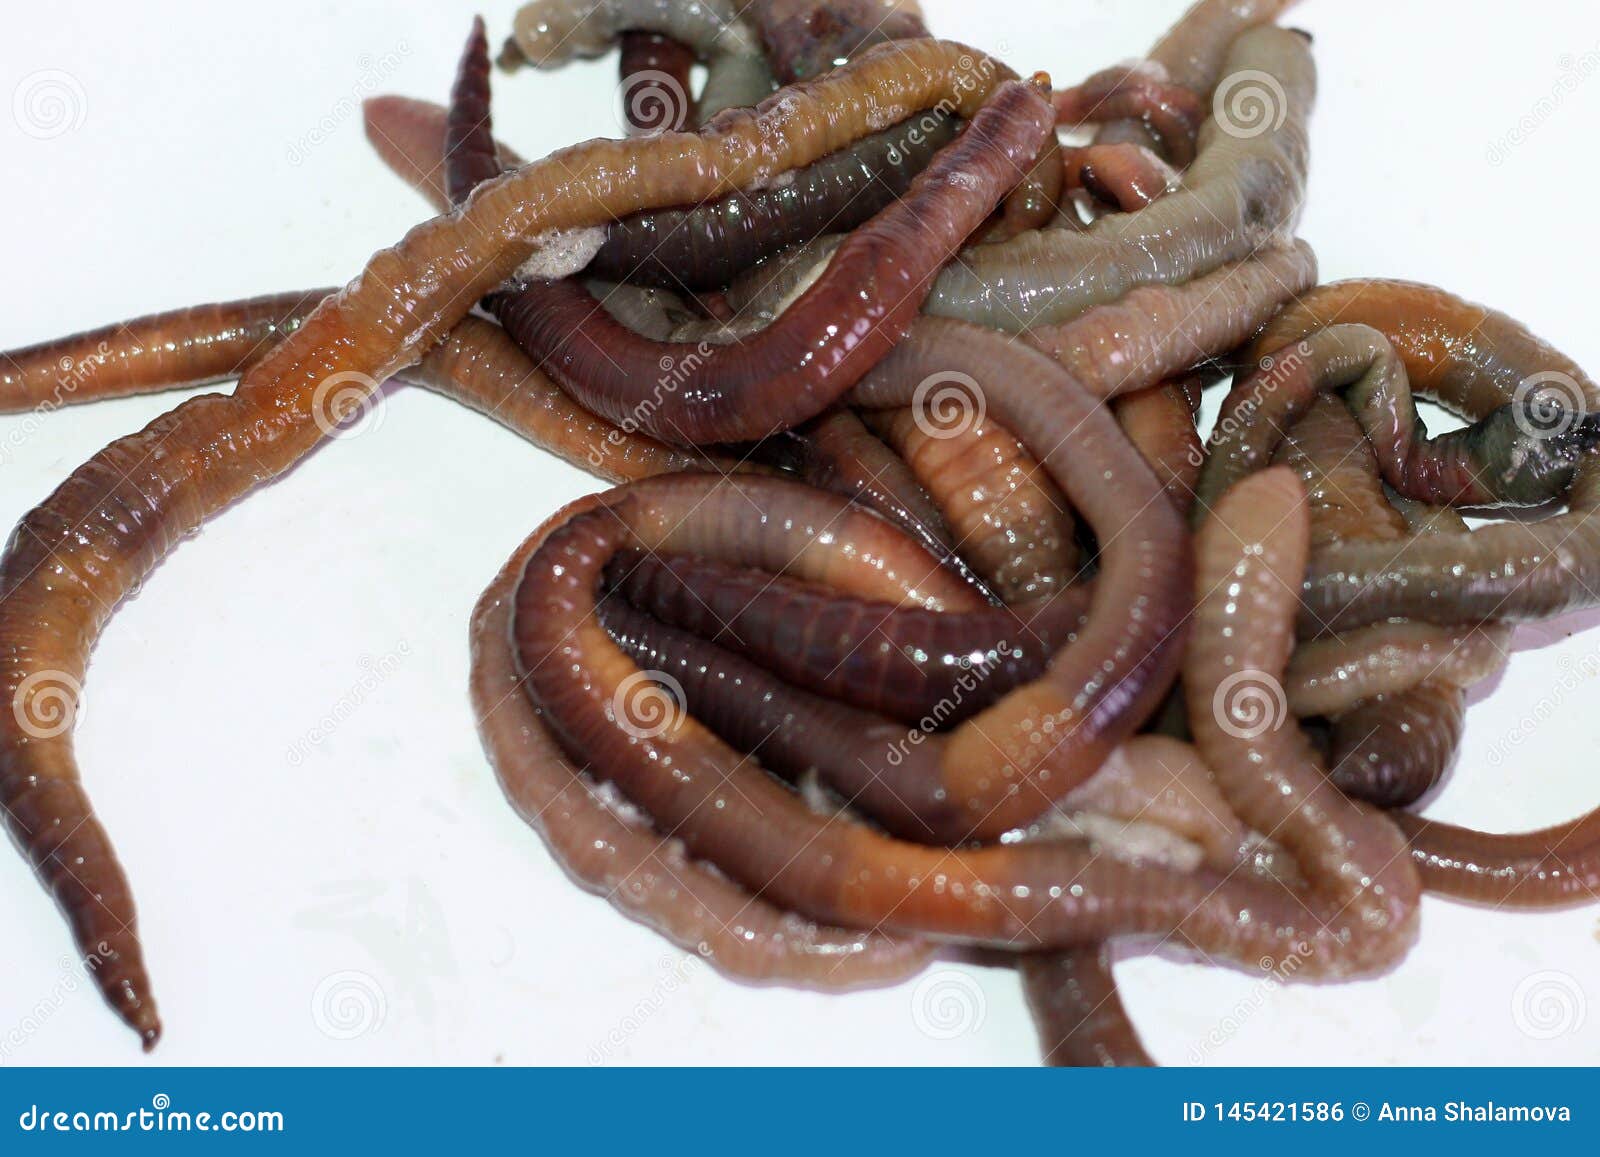 535 Live Earthworm Stock Photos - Free & Royalty-Free Stock Photos